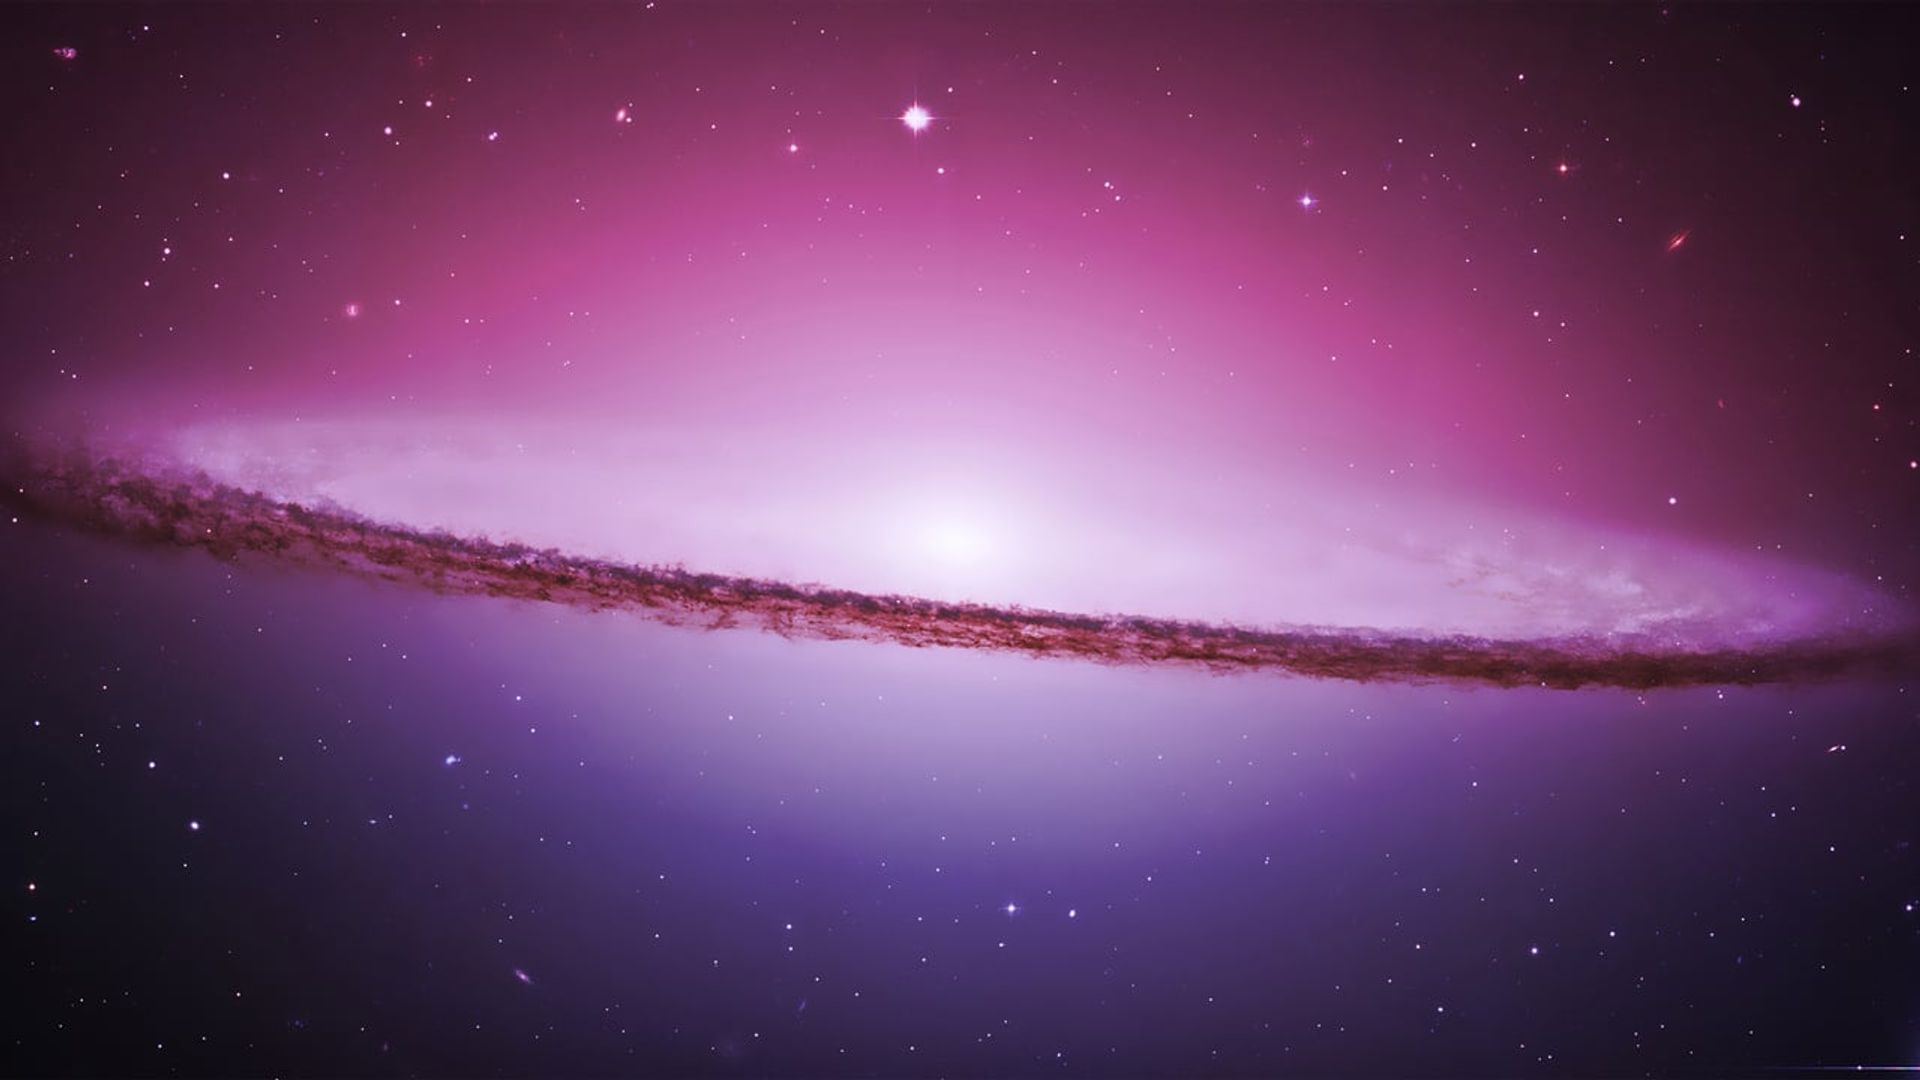 Stephen Hawking's Universe background